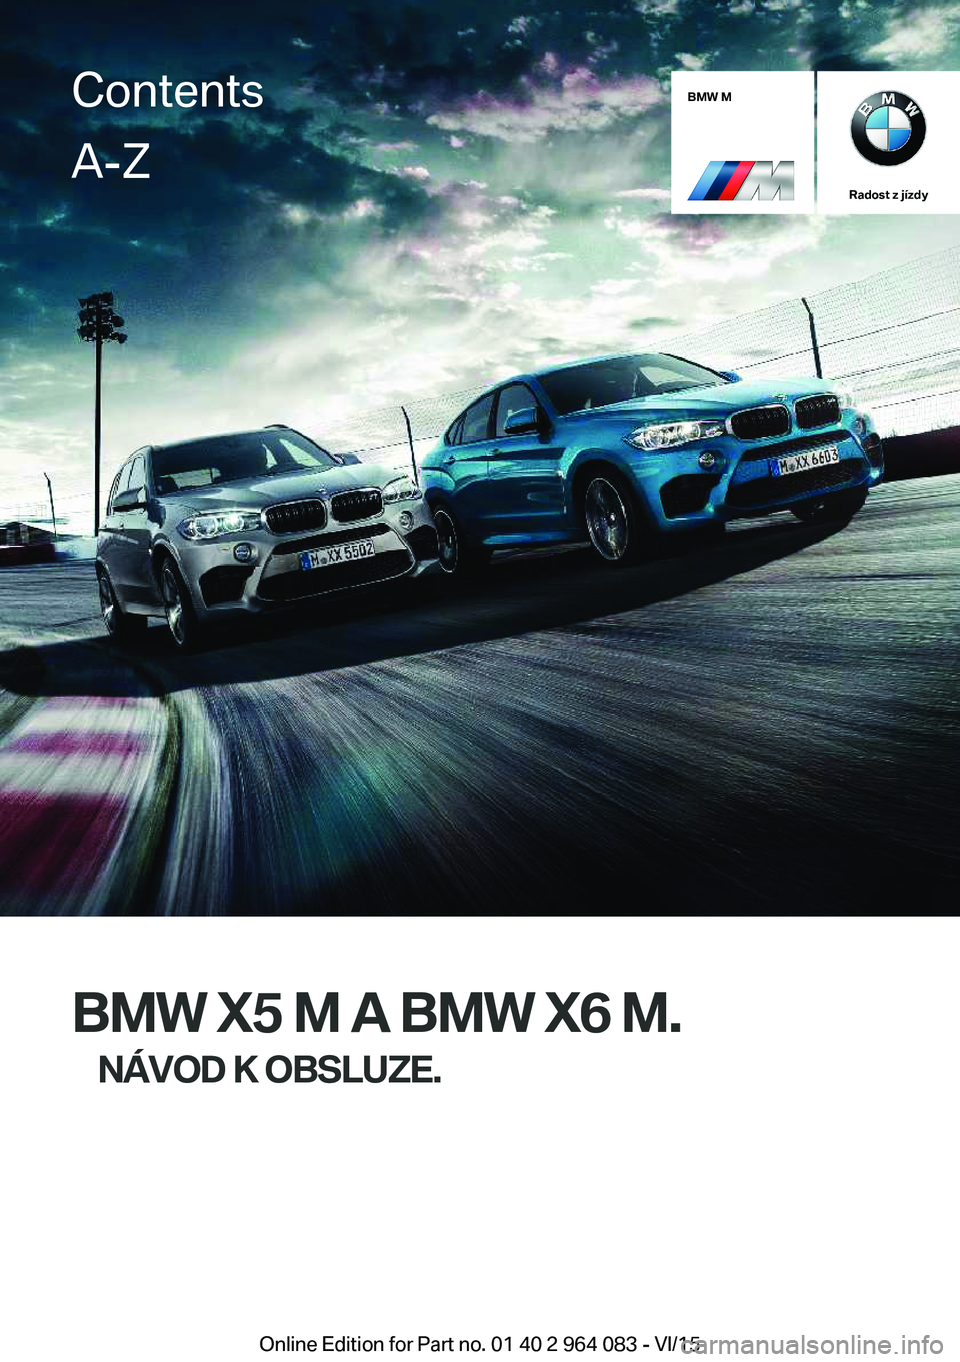 BMW X6 M 2016  Návod na použití (in Czech) BMW M
Radost z jízdy
BMW X5 M A BMW X6 M.NÁVOD K OBSLUZE.
ContentsA-Z
Online Edition for Part no. 01 40 2 964 083 - VI/15   